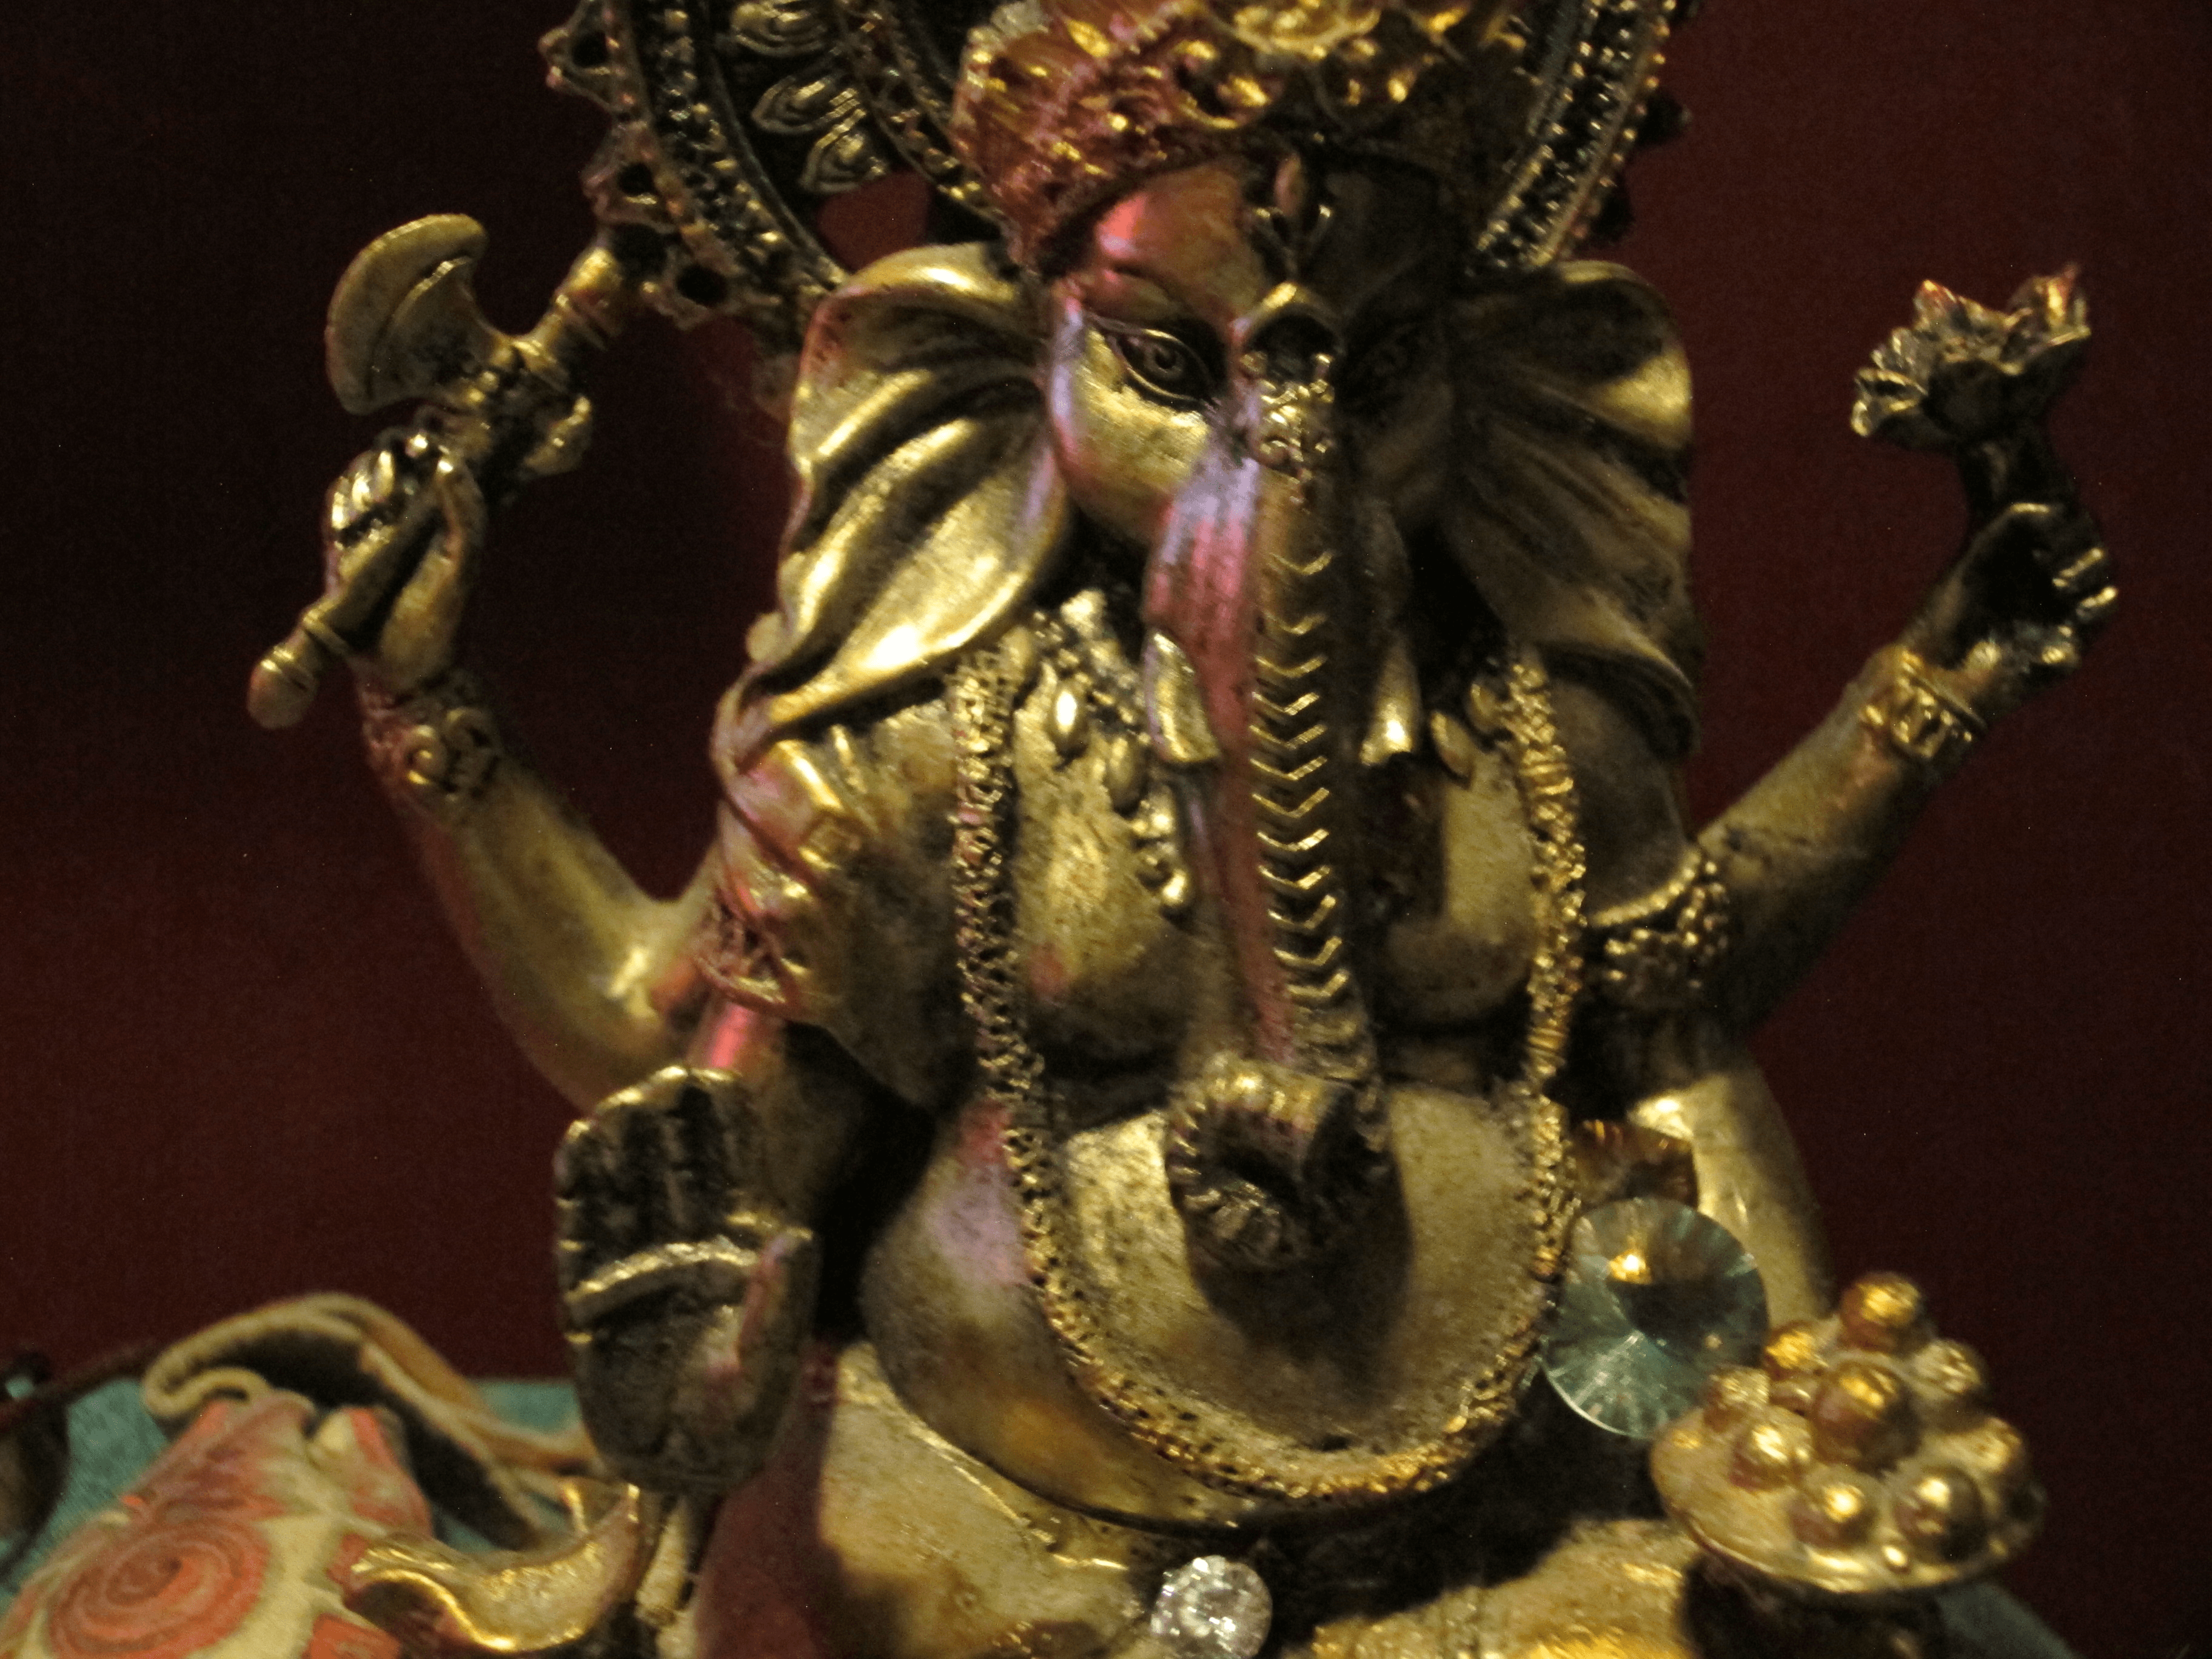 Macro photo of Ganesha Statue - photo by BTVG